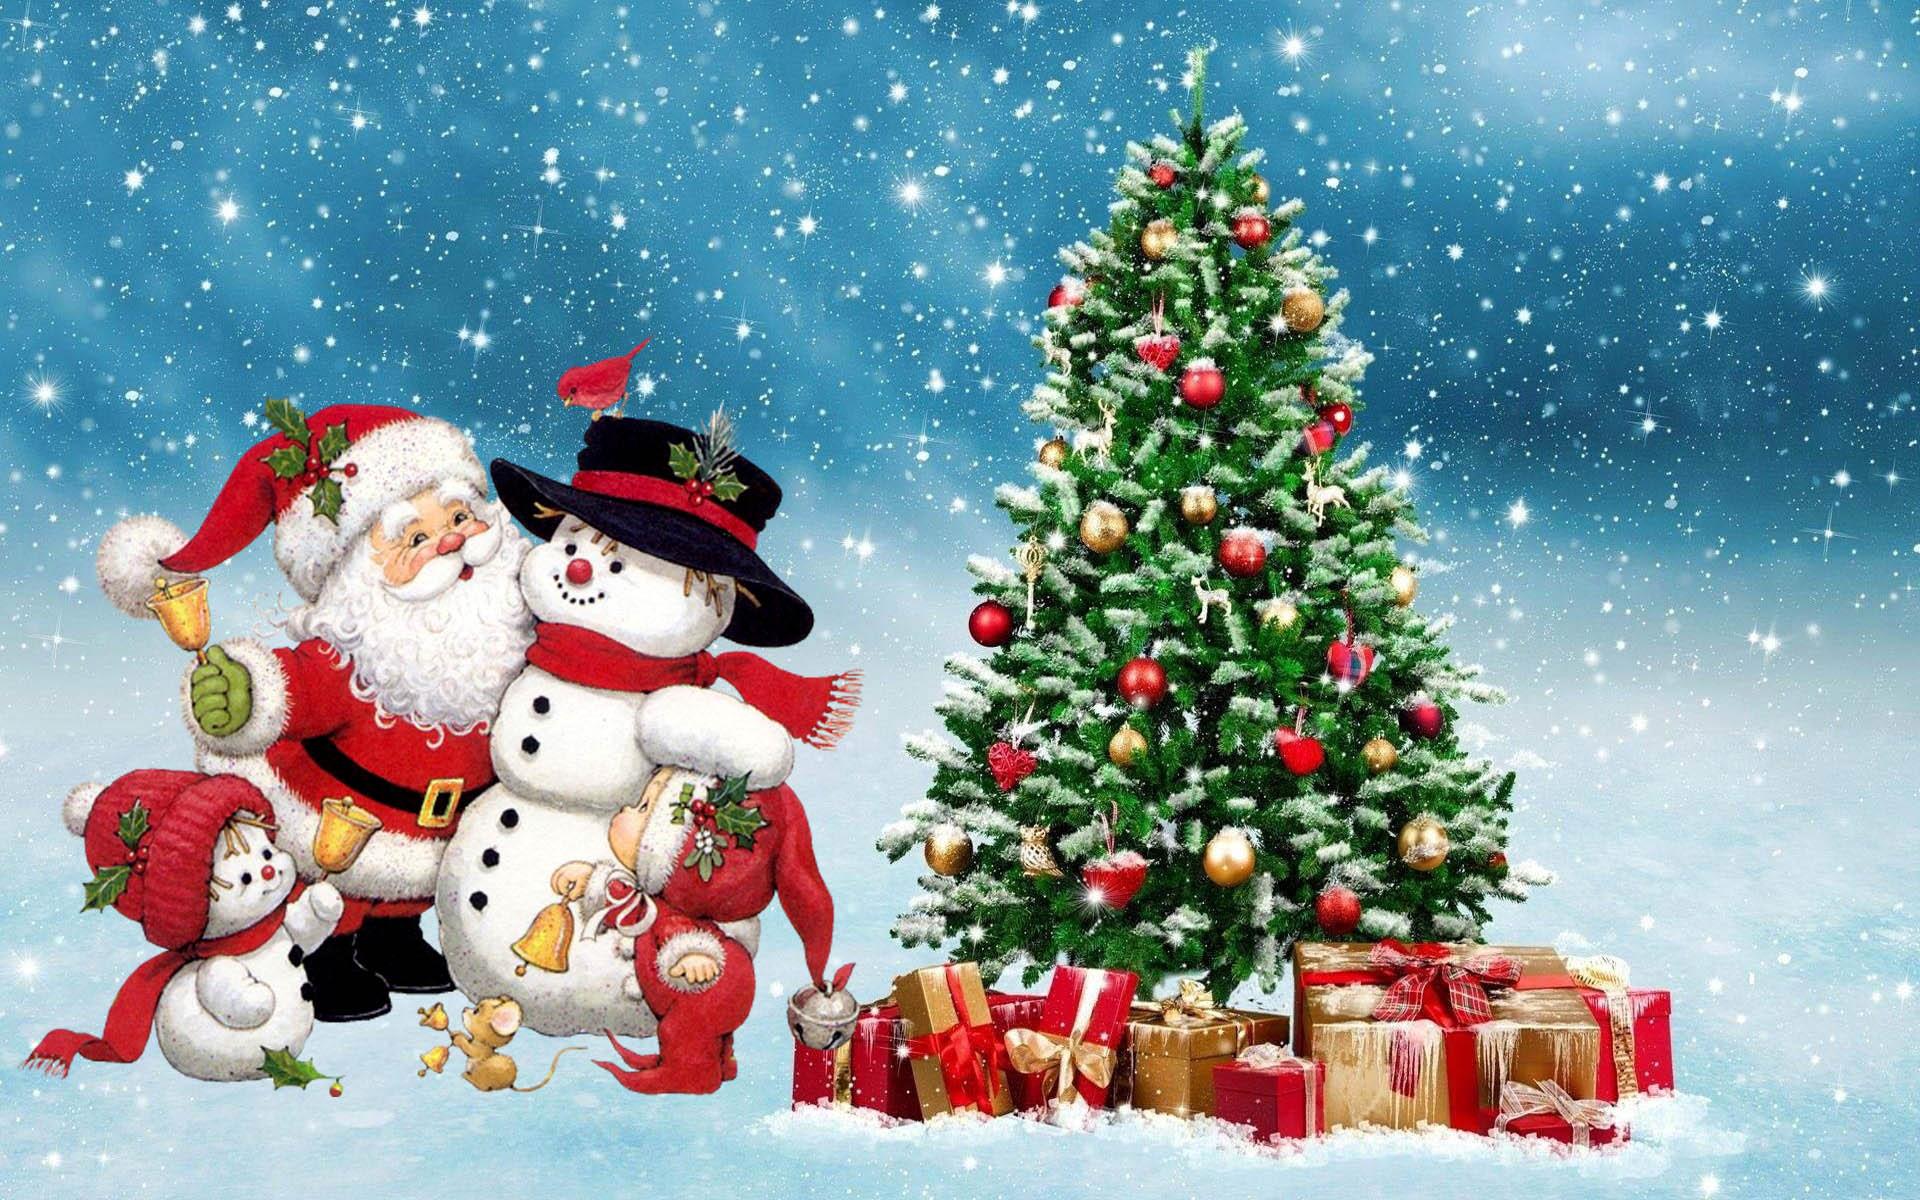 Merry Christmas Santa Snowman Winter Christmas Tree Ornaments Gifts Festive Background HD 1920x1200, Wallpaper13.com